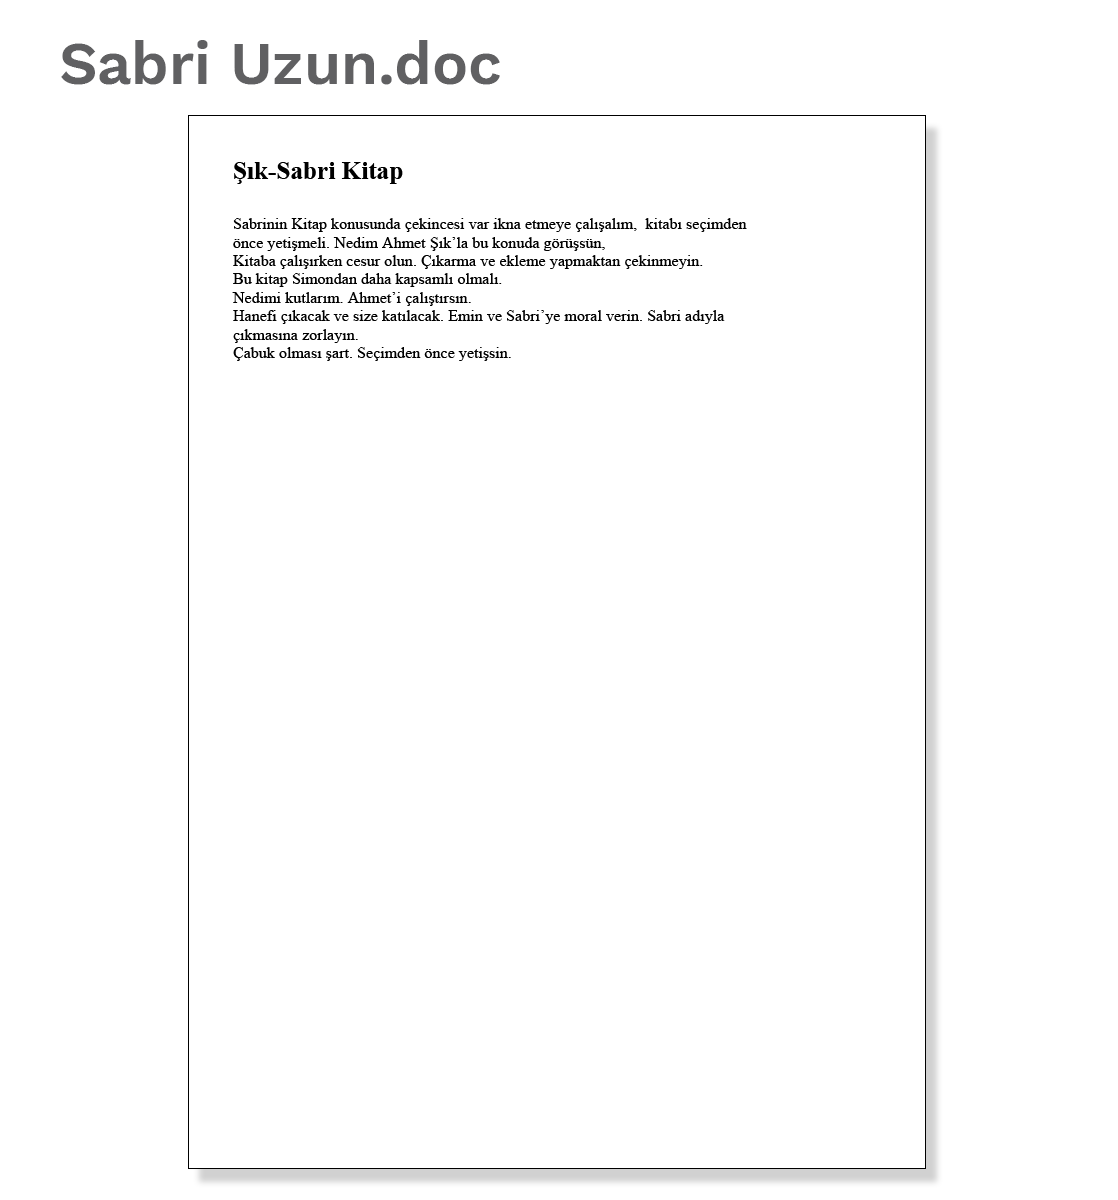 Document 6: Sabri Uzun.doc